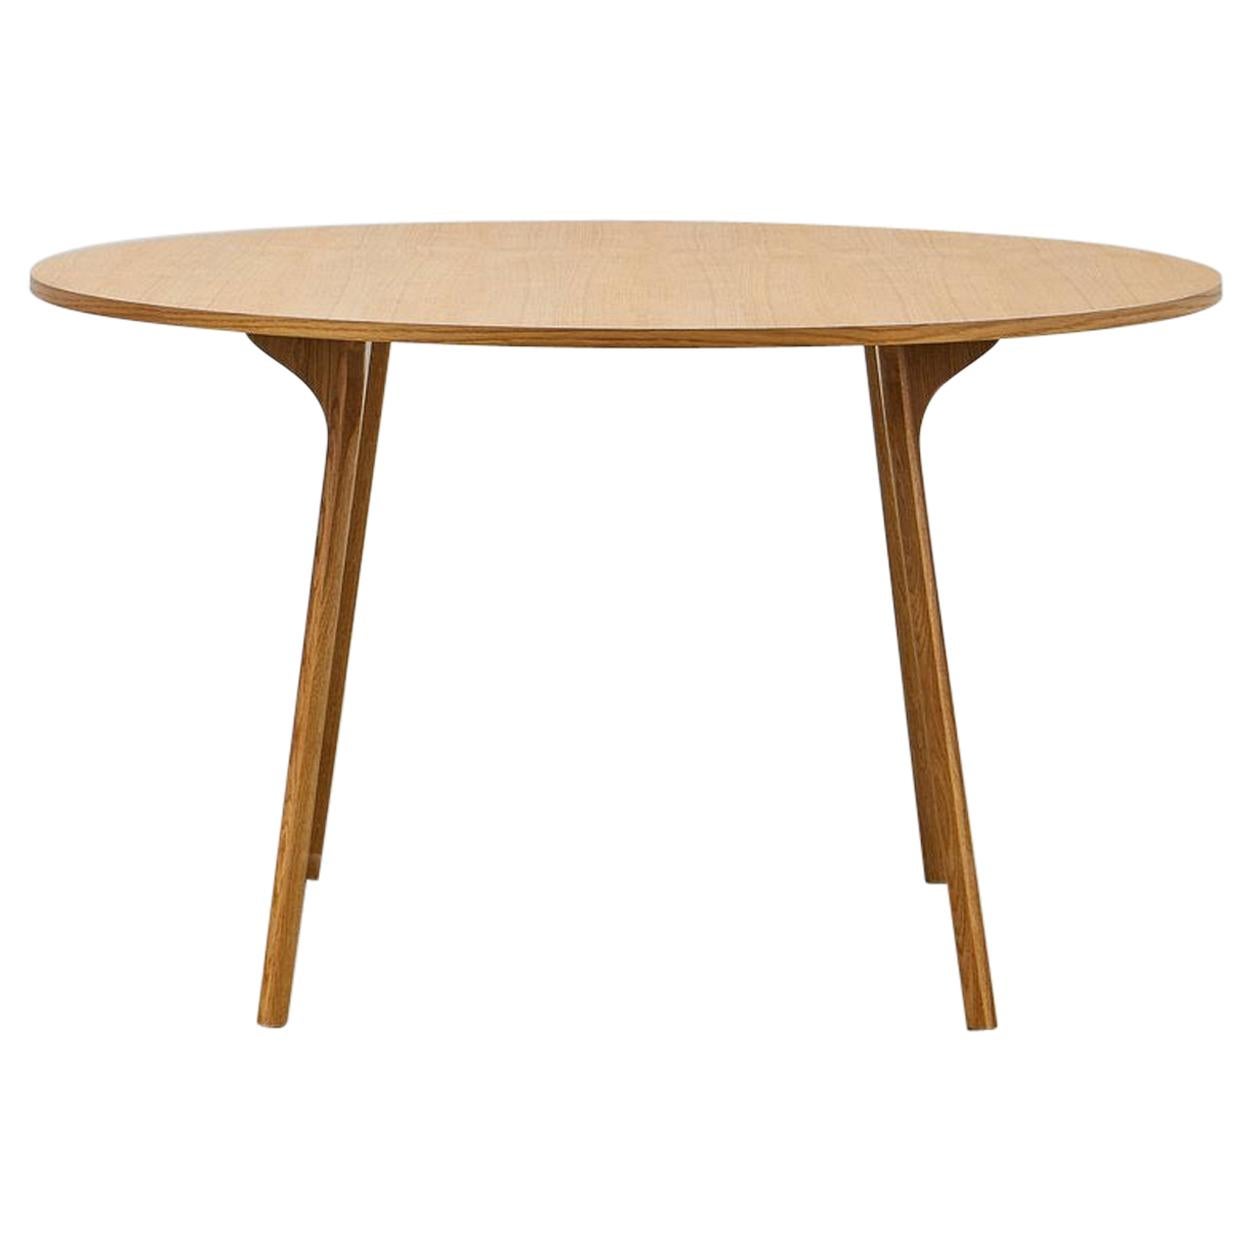 PH Circle Table, Natural Oak Wood Legs, Veneer Table Plate and Edge For Sale